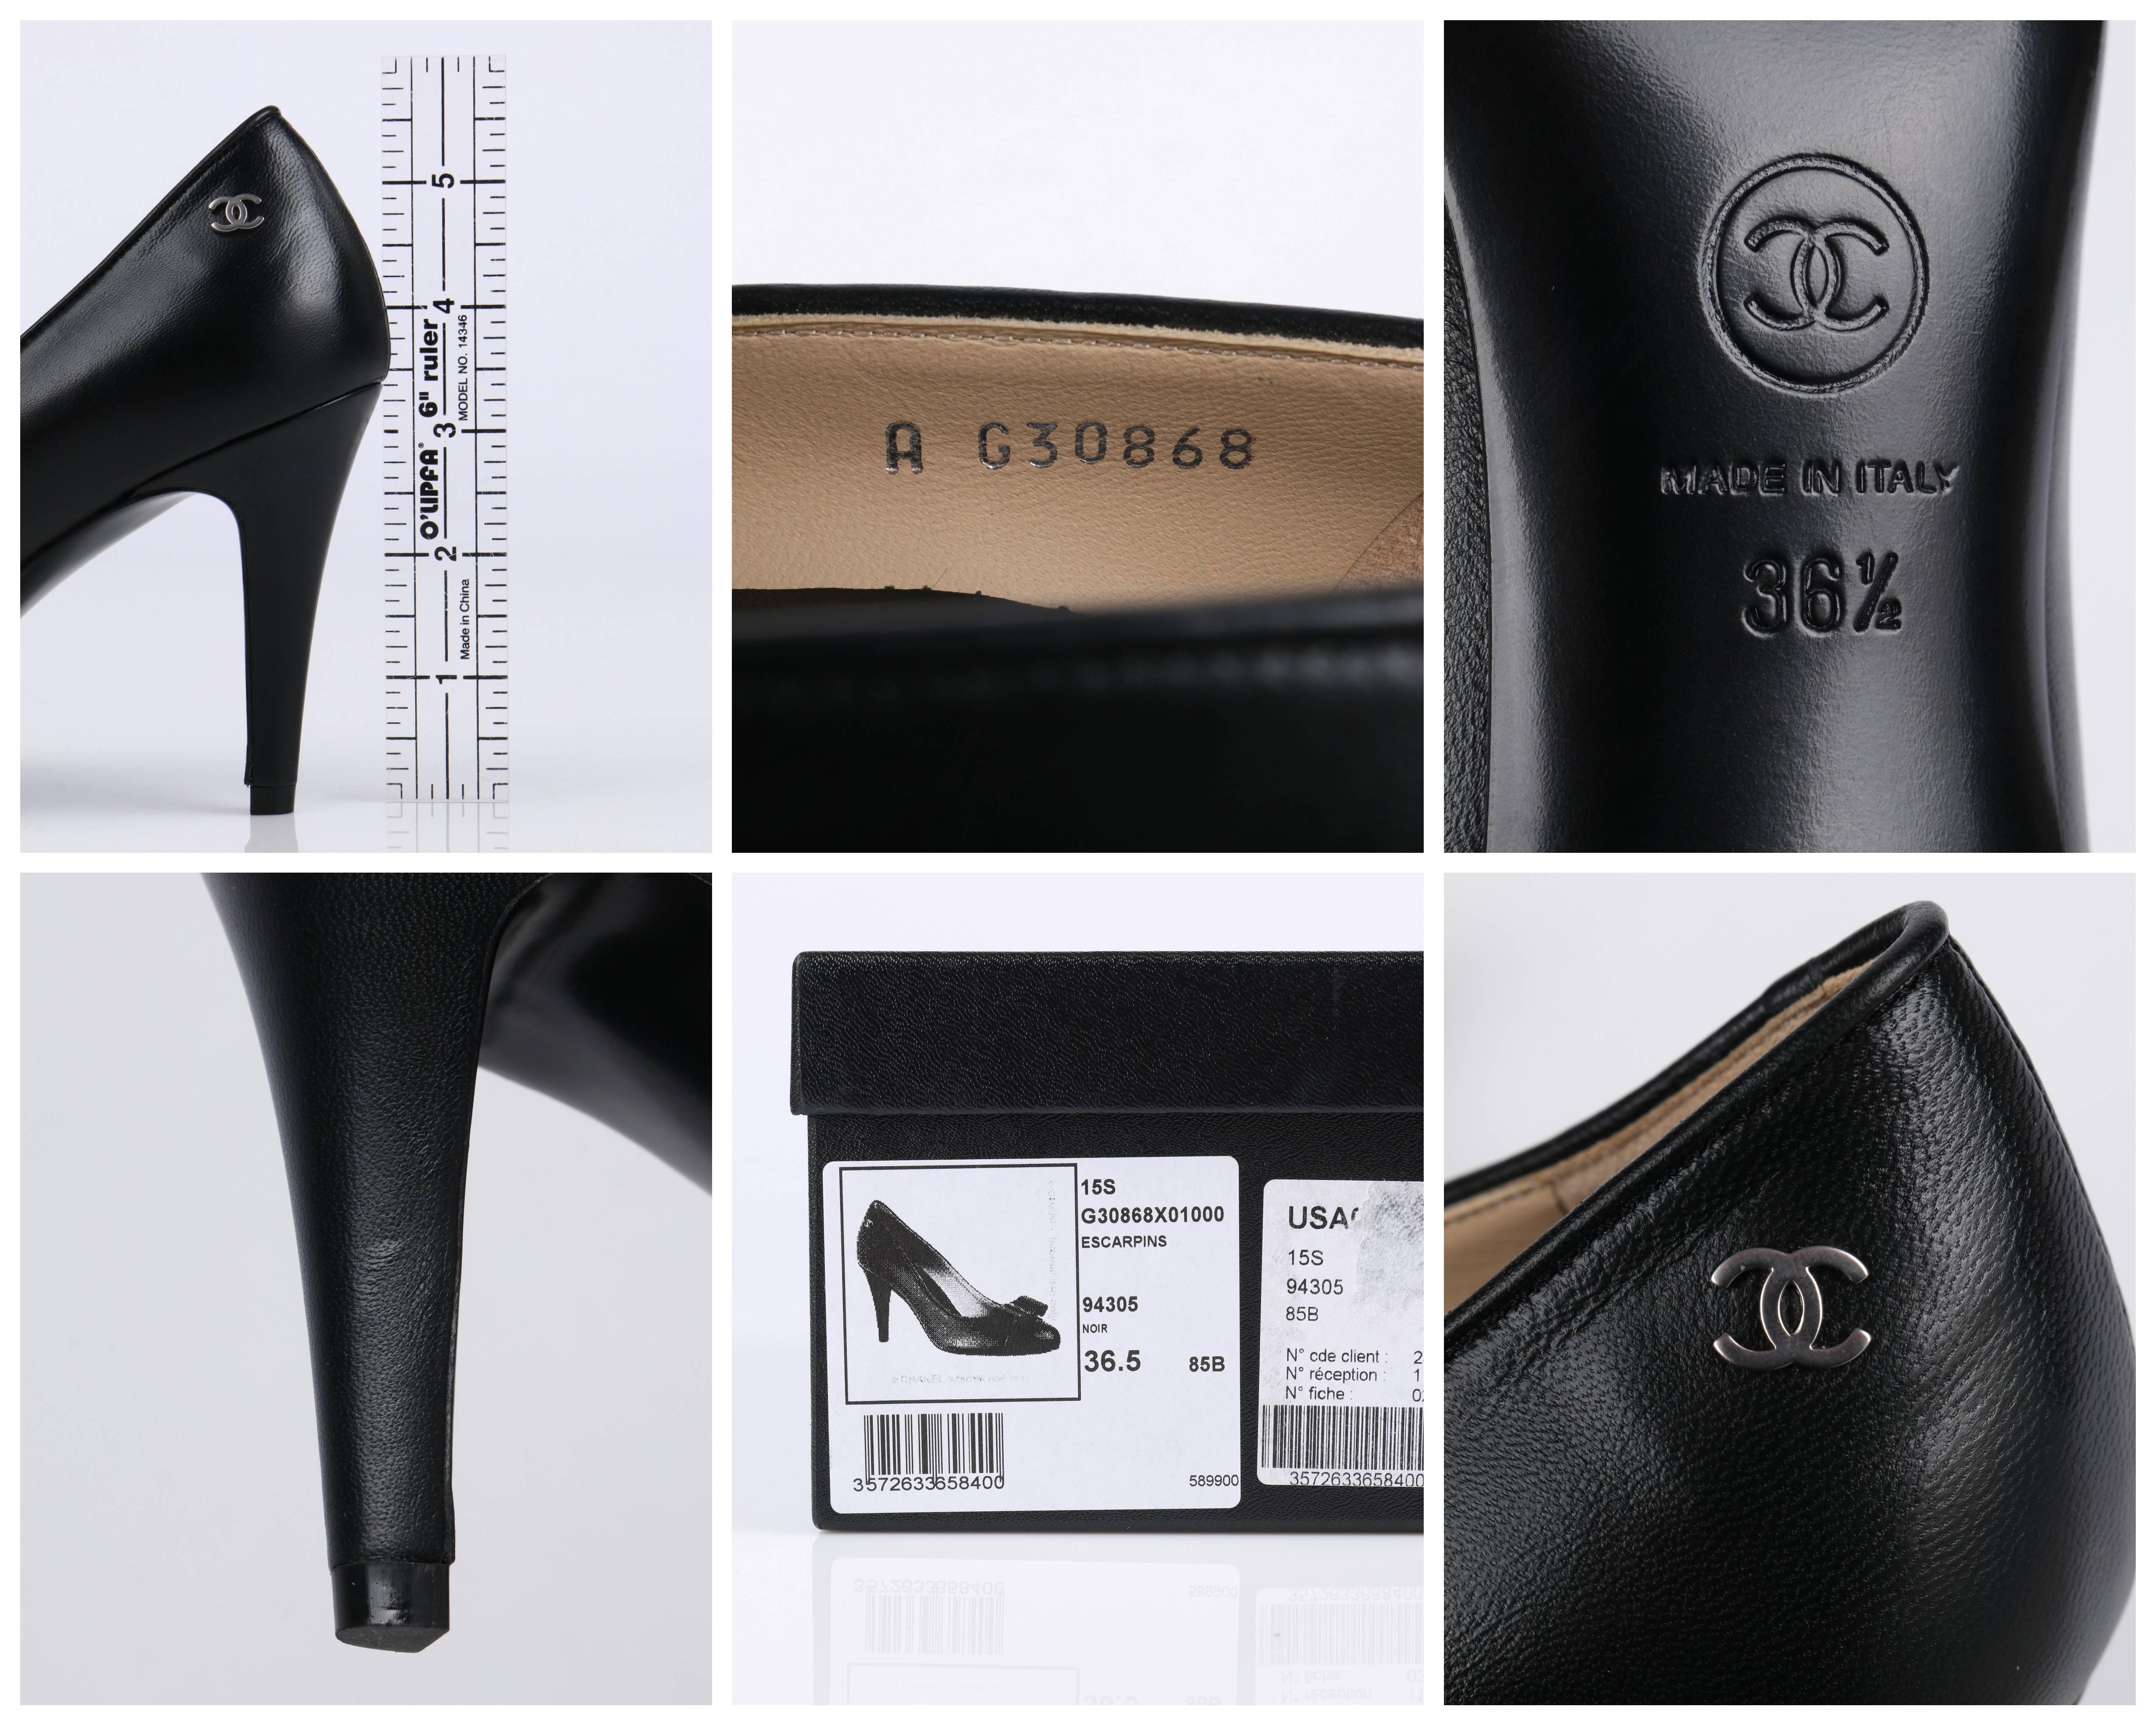 CHANEL S/S 2015 Classic Black Leather CC Logo Bow Front Pumps Shoes 36.5 2